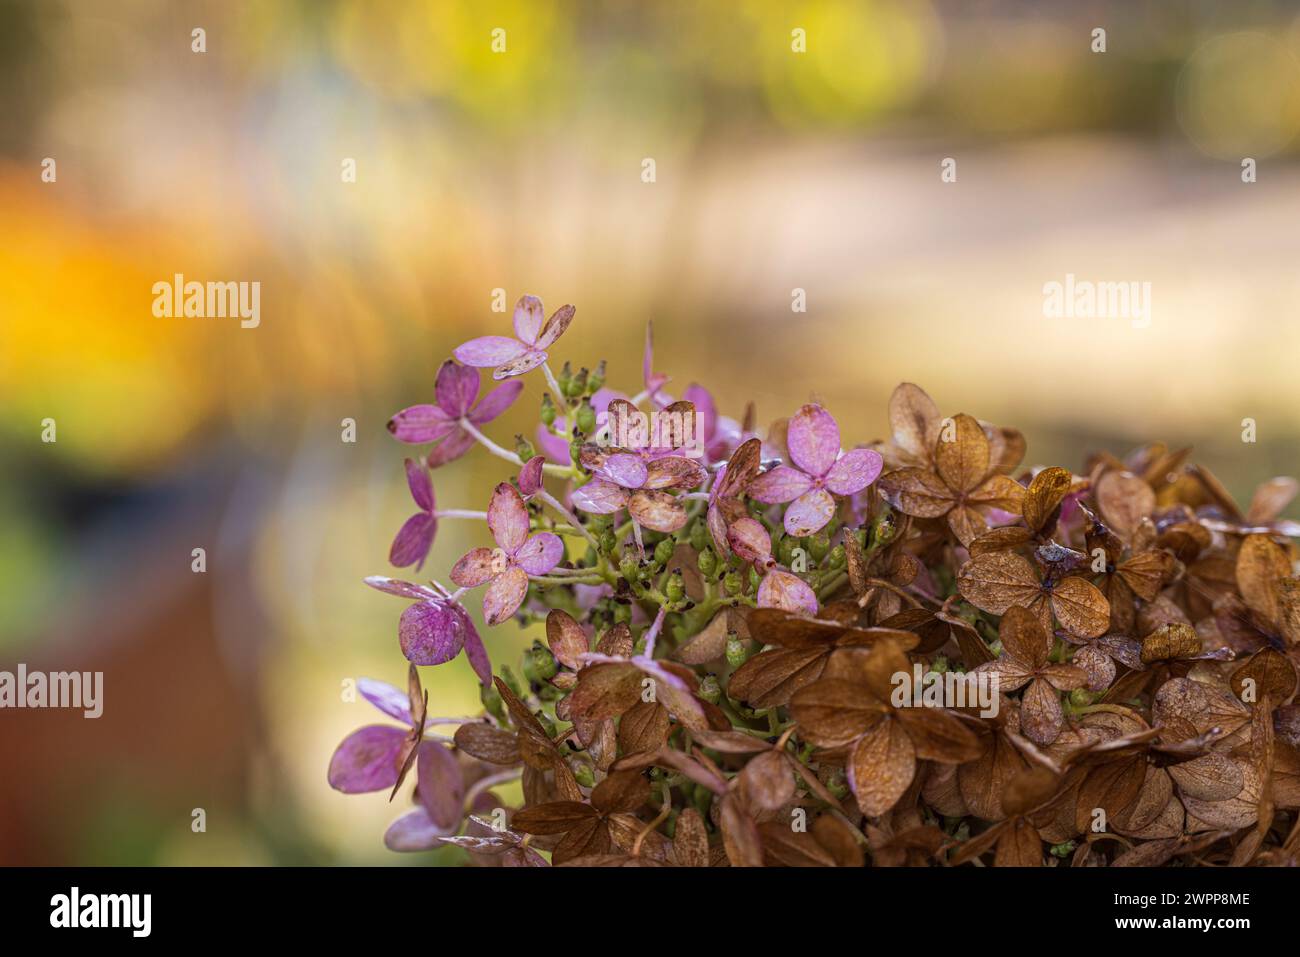 Hydrangeas in fall, blurred flower background Stock Photo